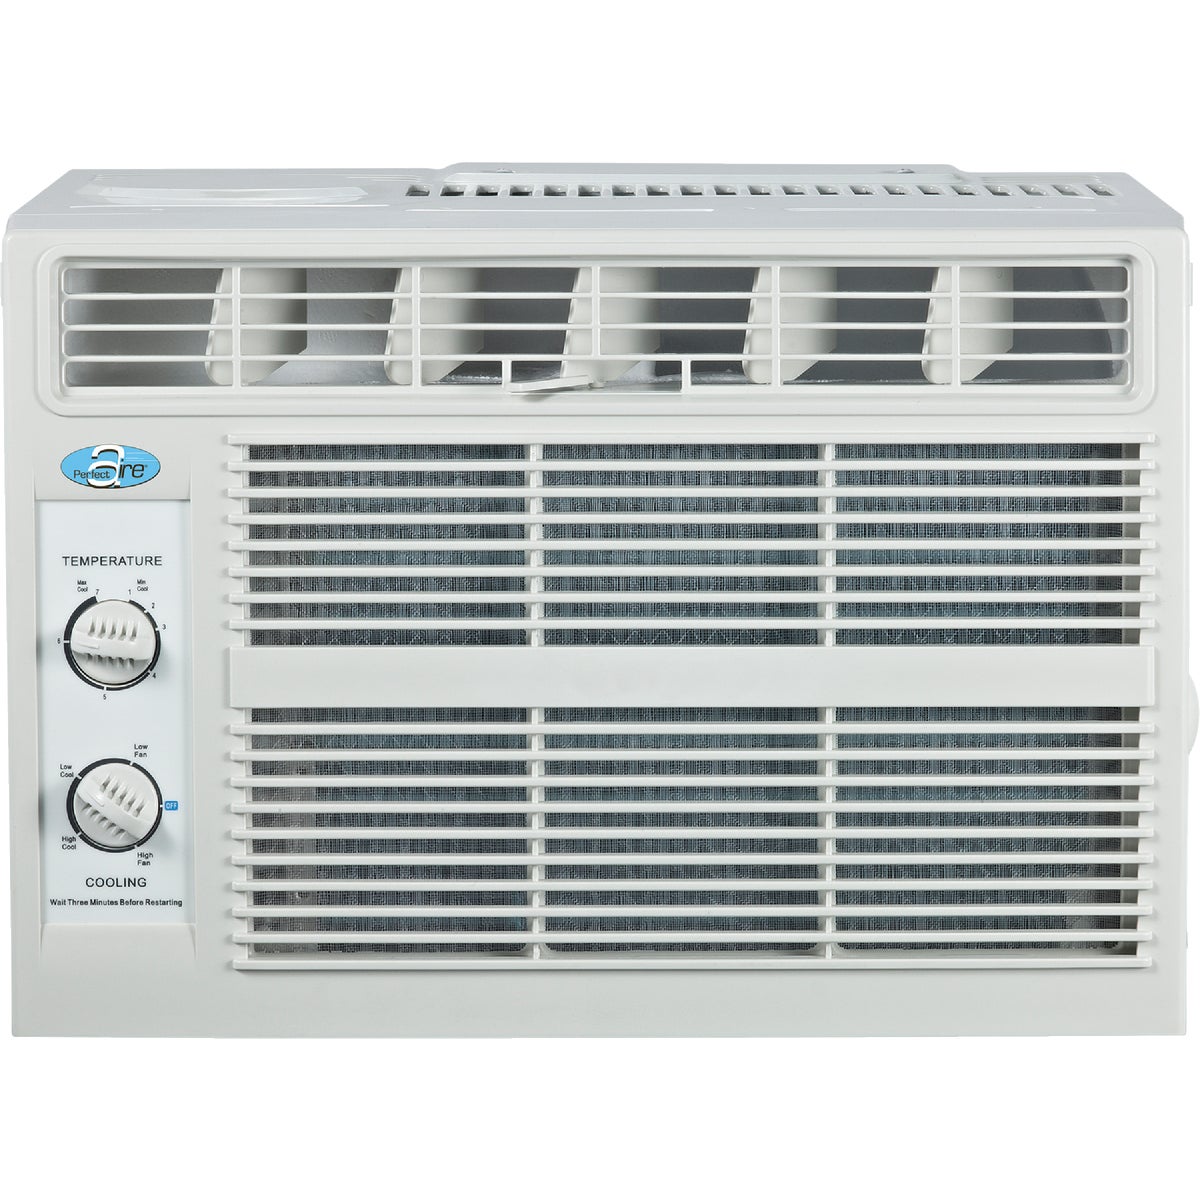 Item 563315, 5000 BTU (British Thermal Unit) window air conditioner with mechanical 